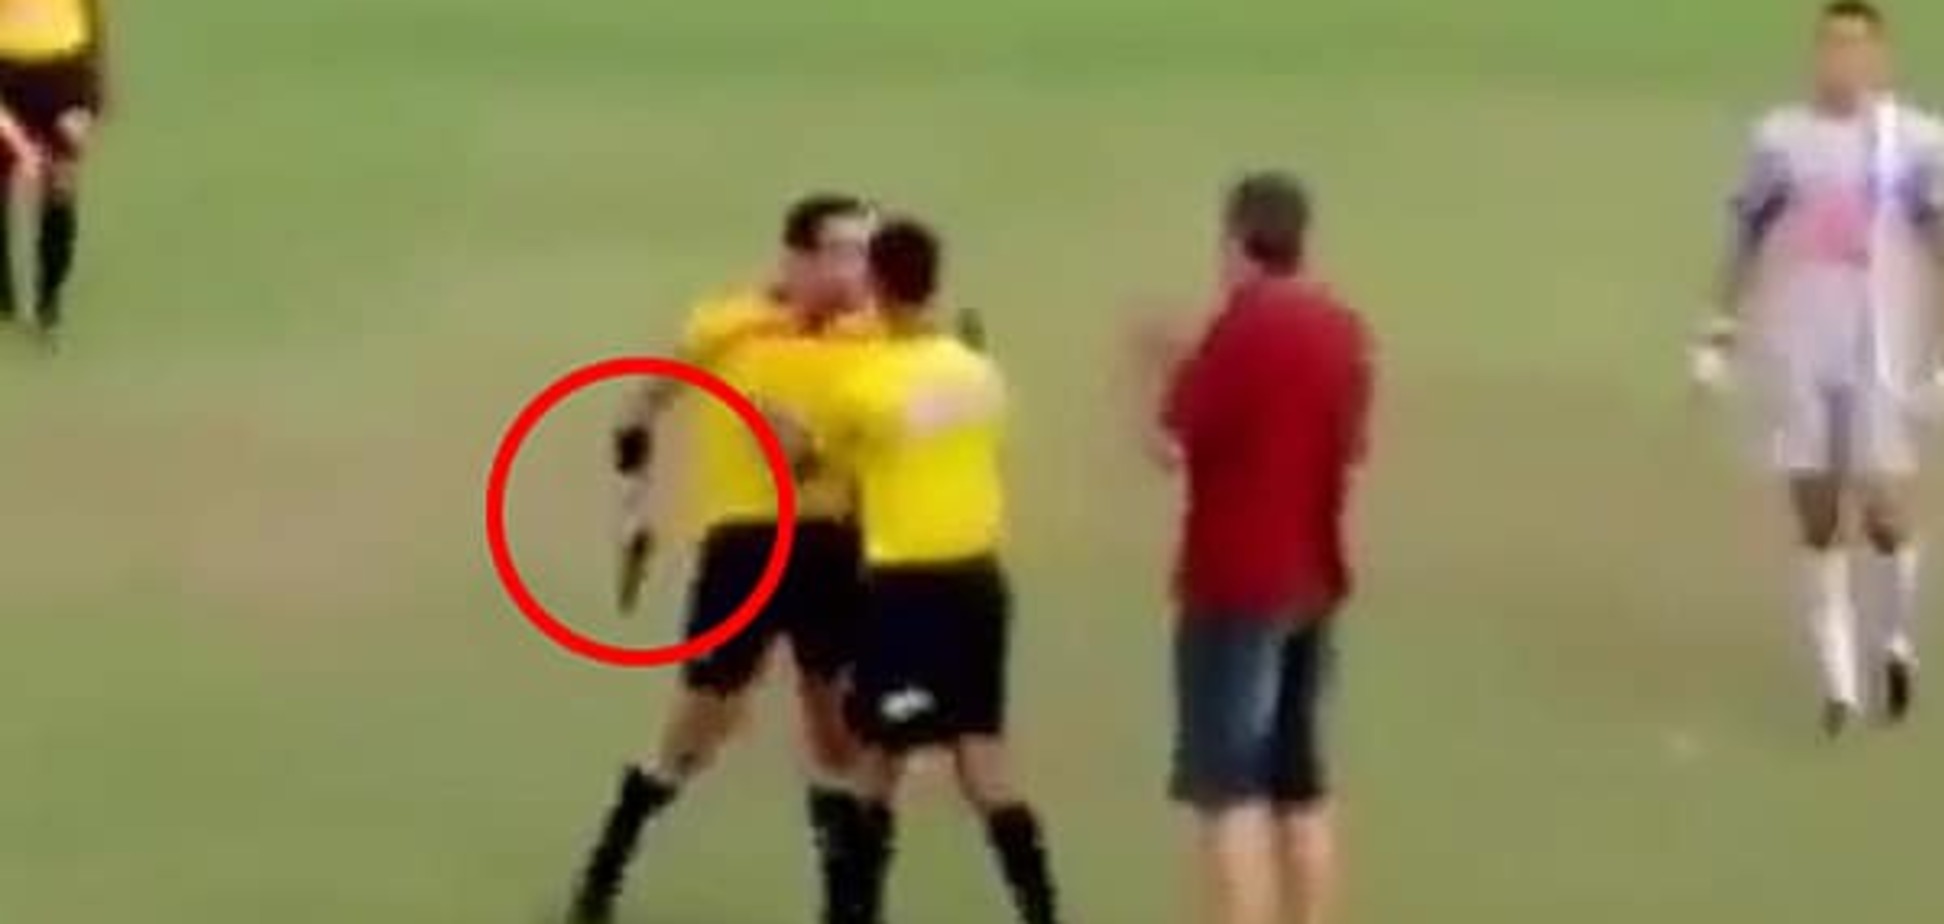 Судья наставил на футболиста пистолет во время матча: видео угрозы